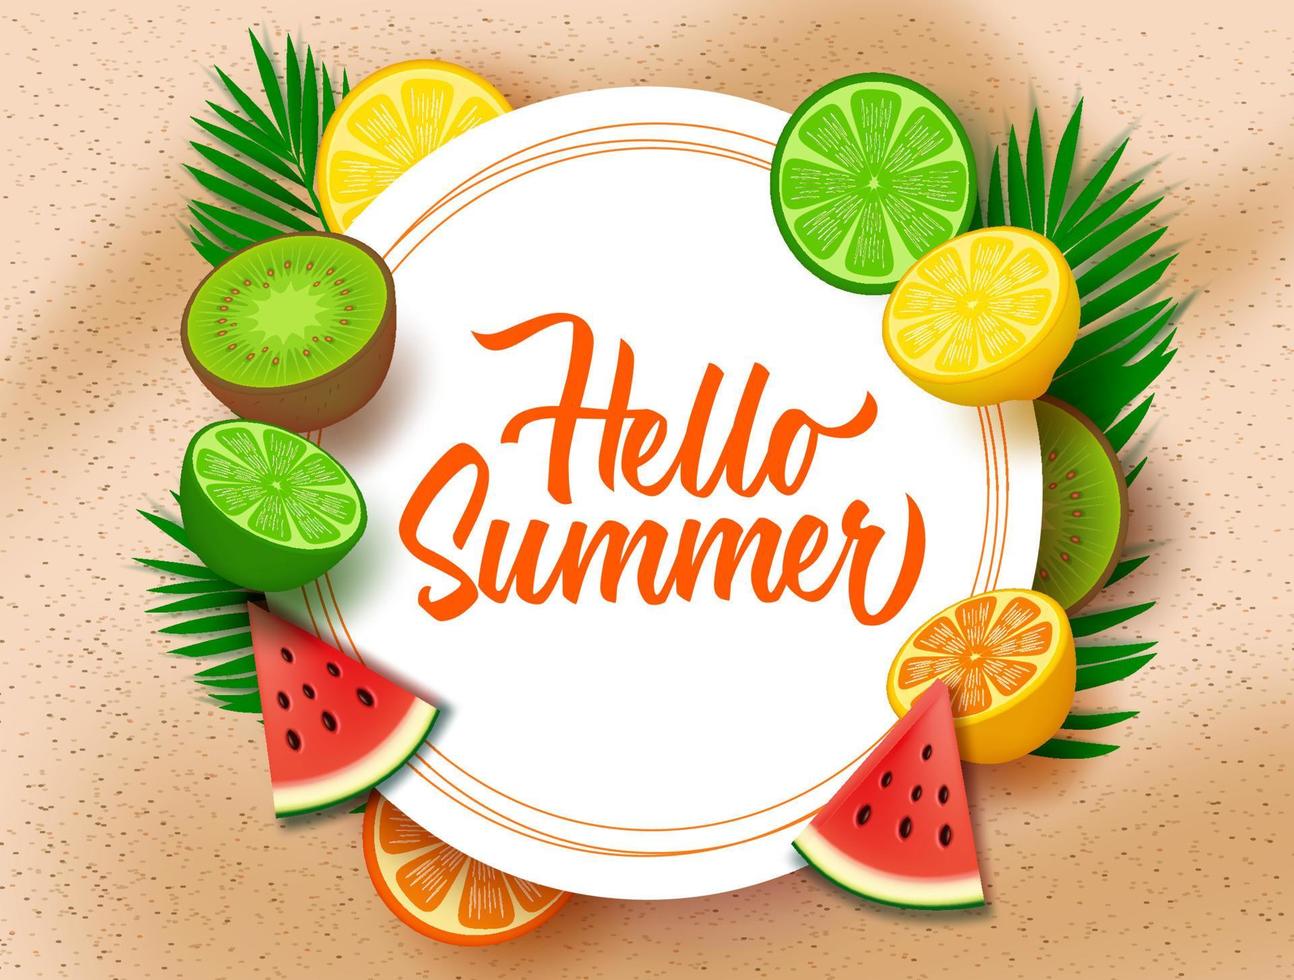 hola verano con plantilla de fondo de frutas. hola texto de verano en un marco blanco circular con elementos de frutas tropicales como melón de agua, calamansi, kiwi, naranja y limón. vector